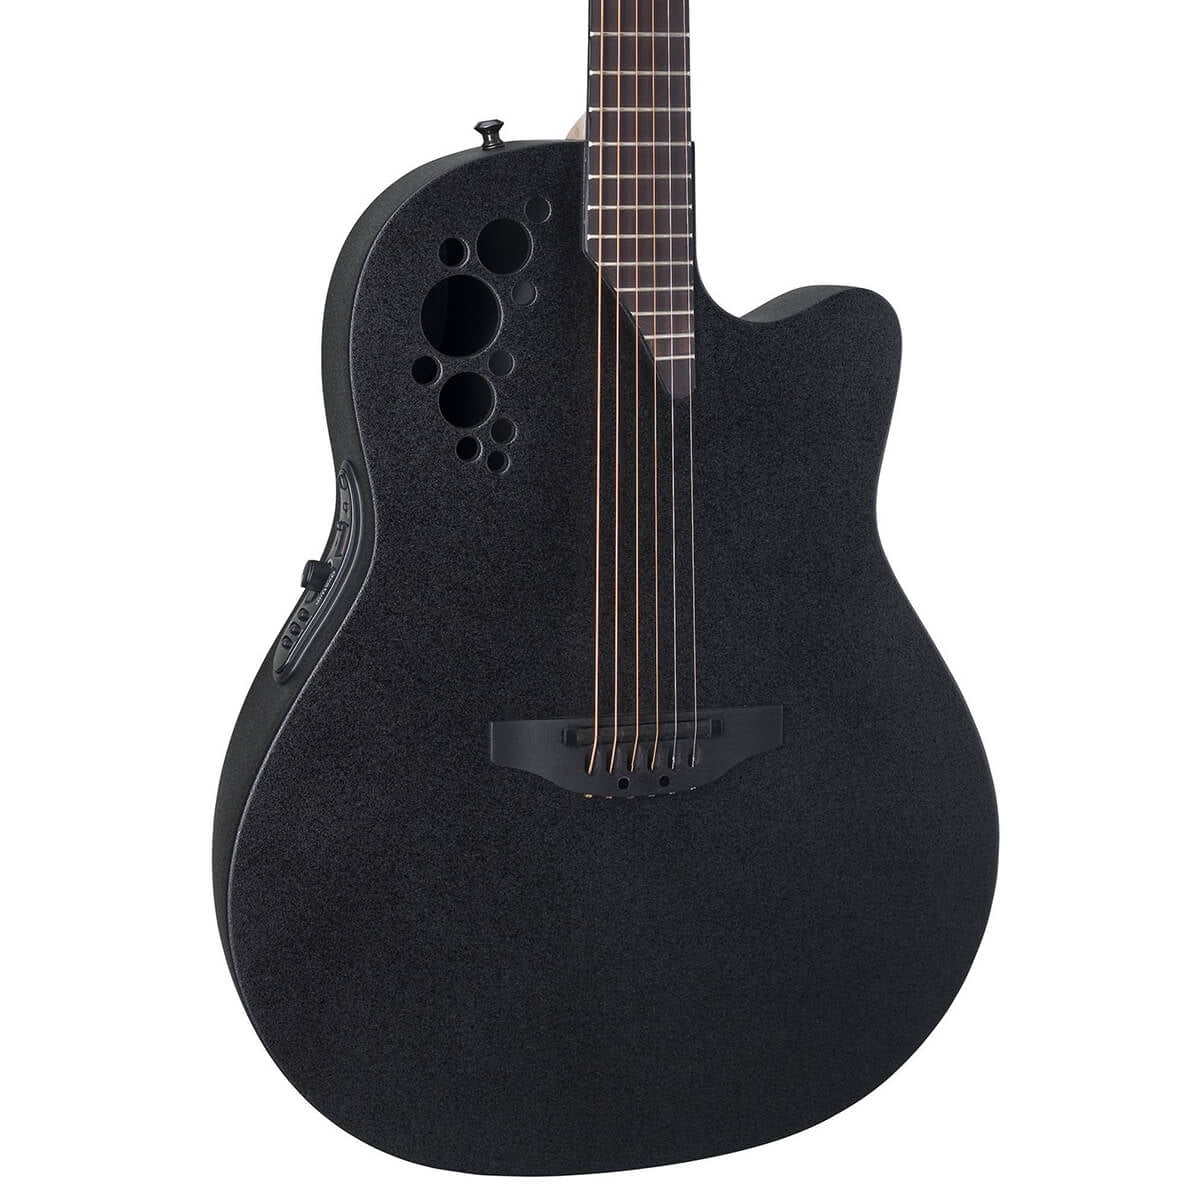 Ovation Elite 2078 TX Acoustic-Electric Guitar with Hardshell Case Black